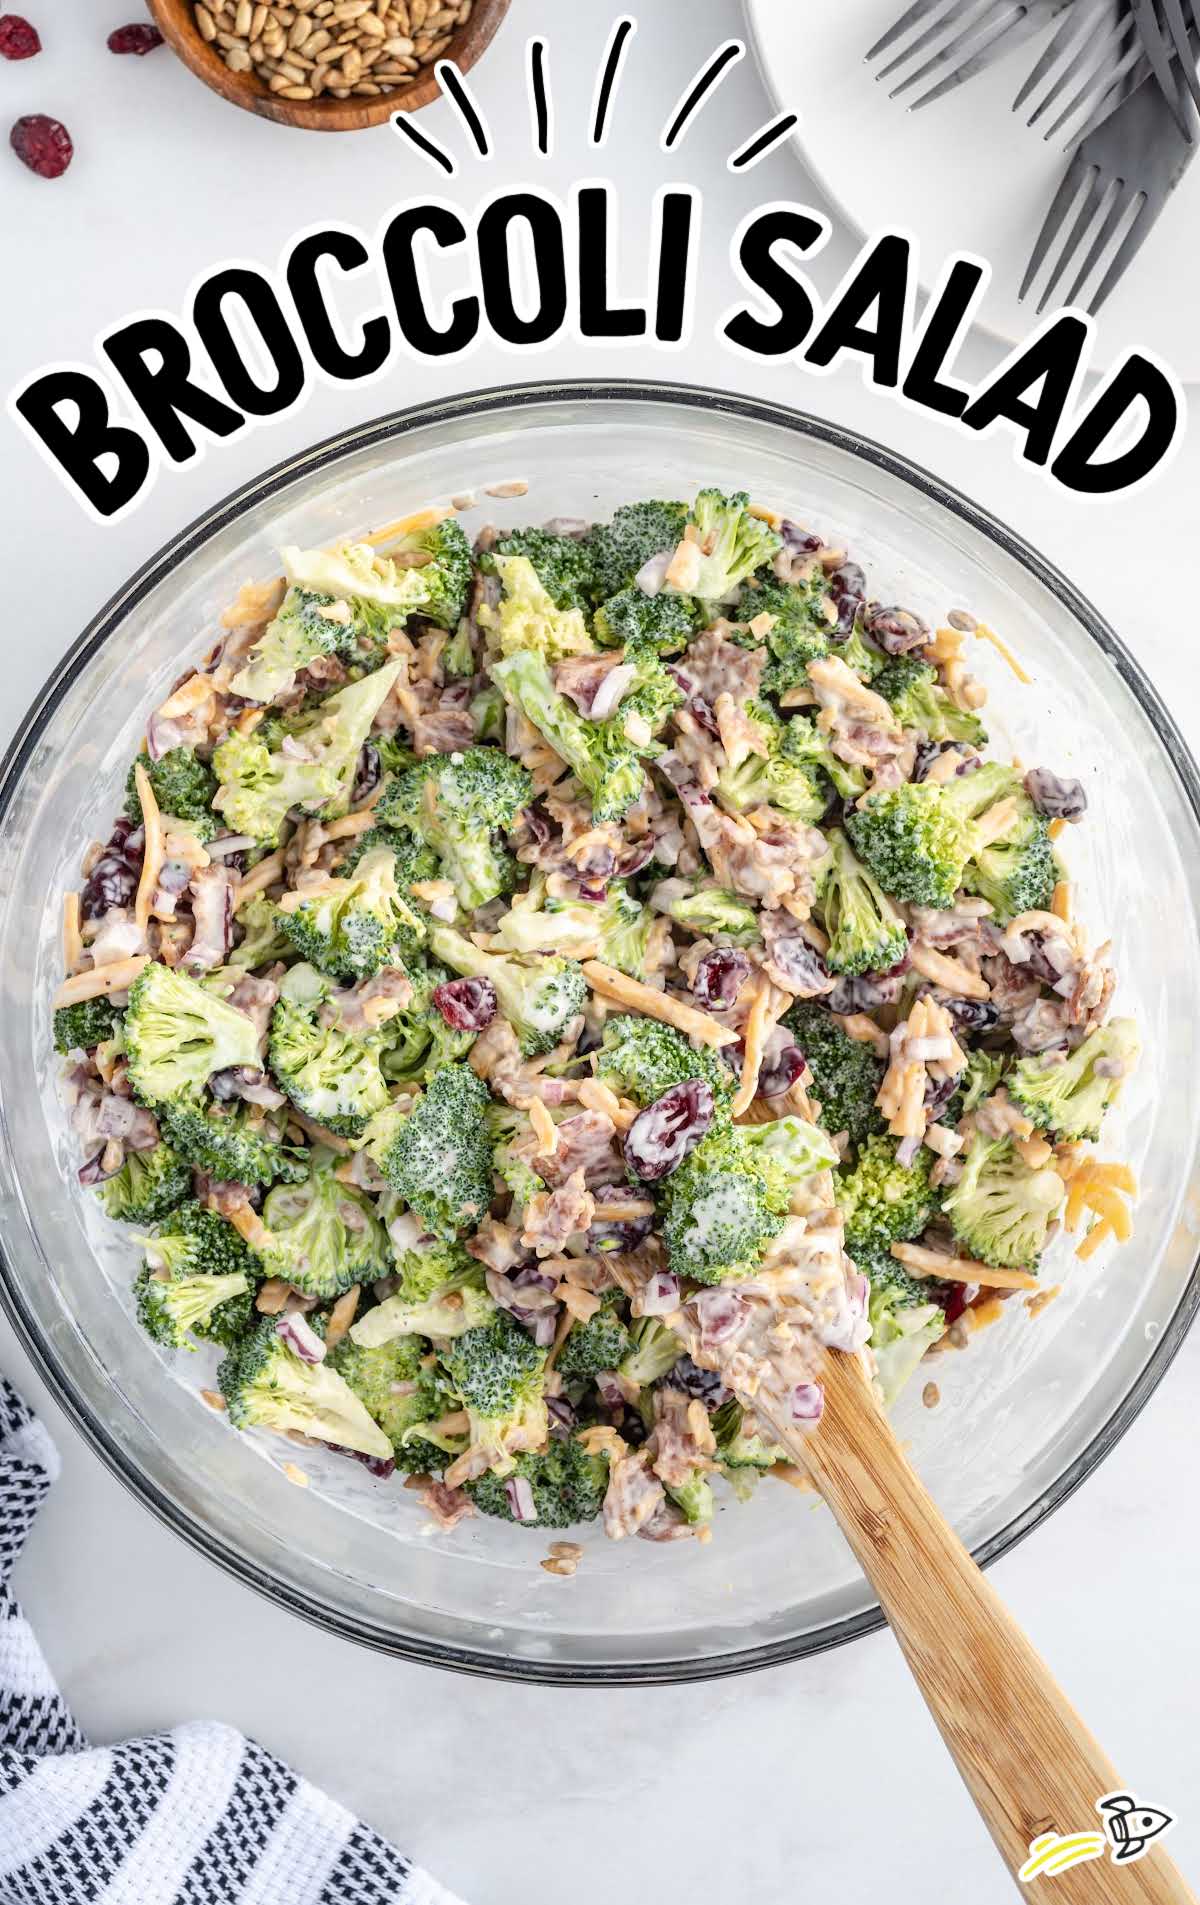 overhead shot of Broccoli Salad with wooden spoon